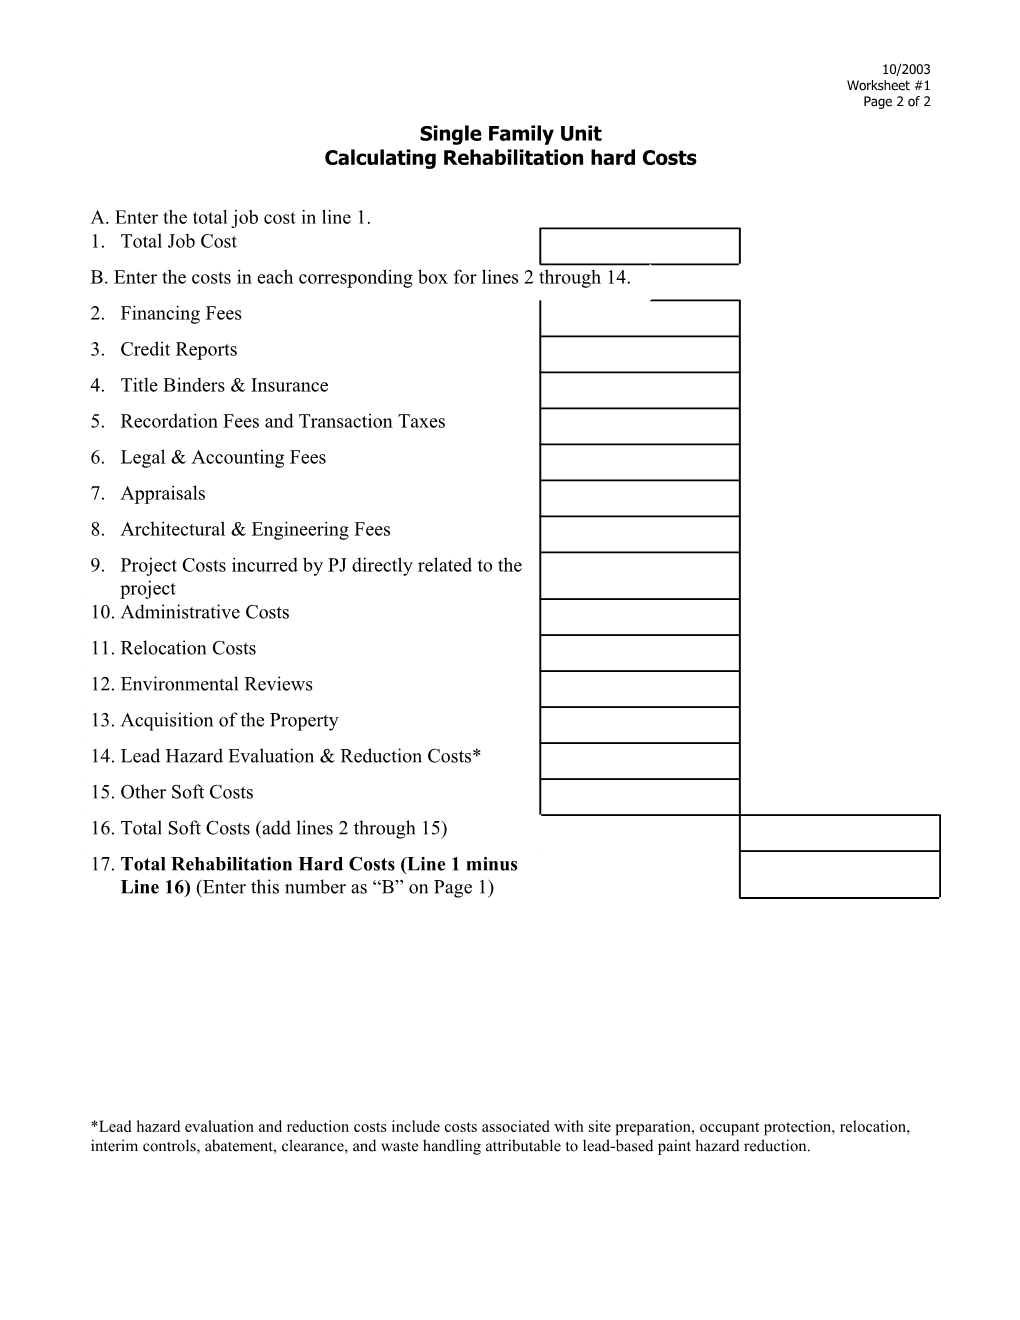 Calculating Level of Rehabilitation Assistance: Worksheet #1